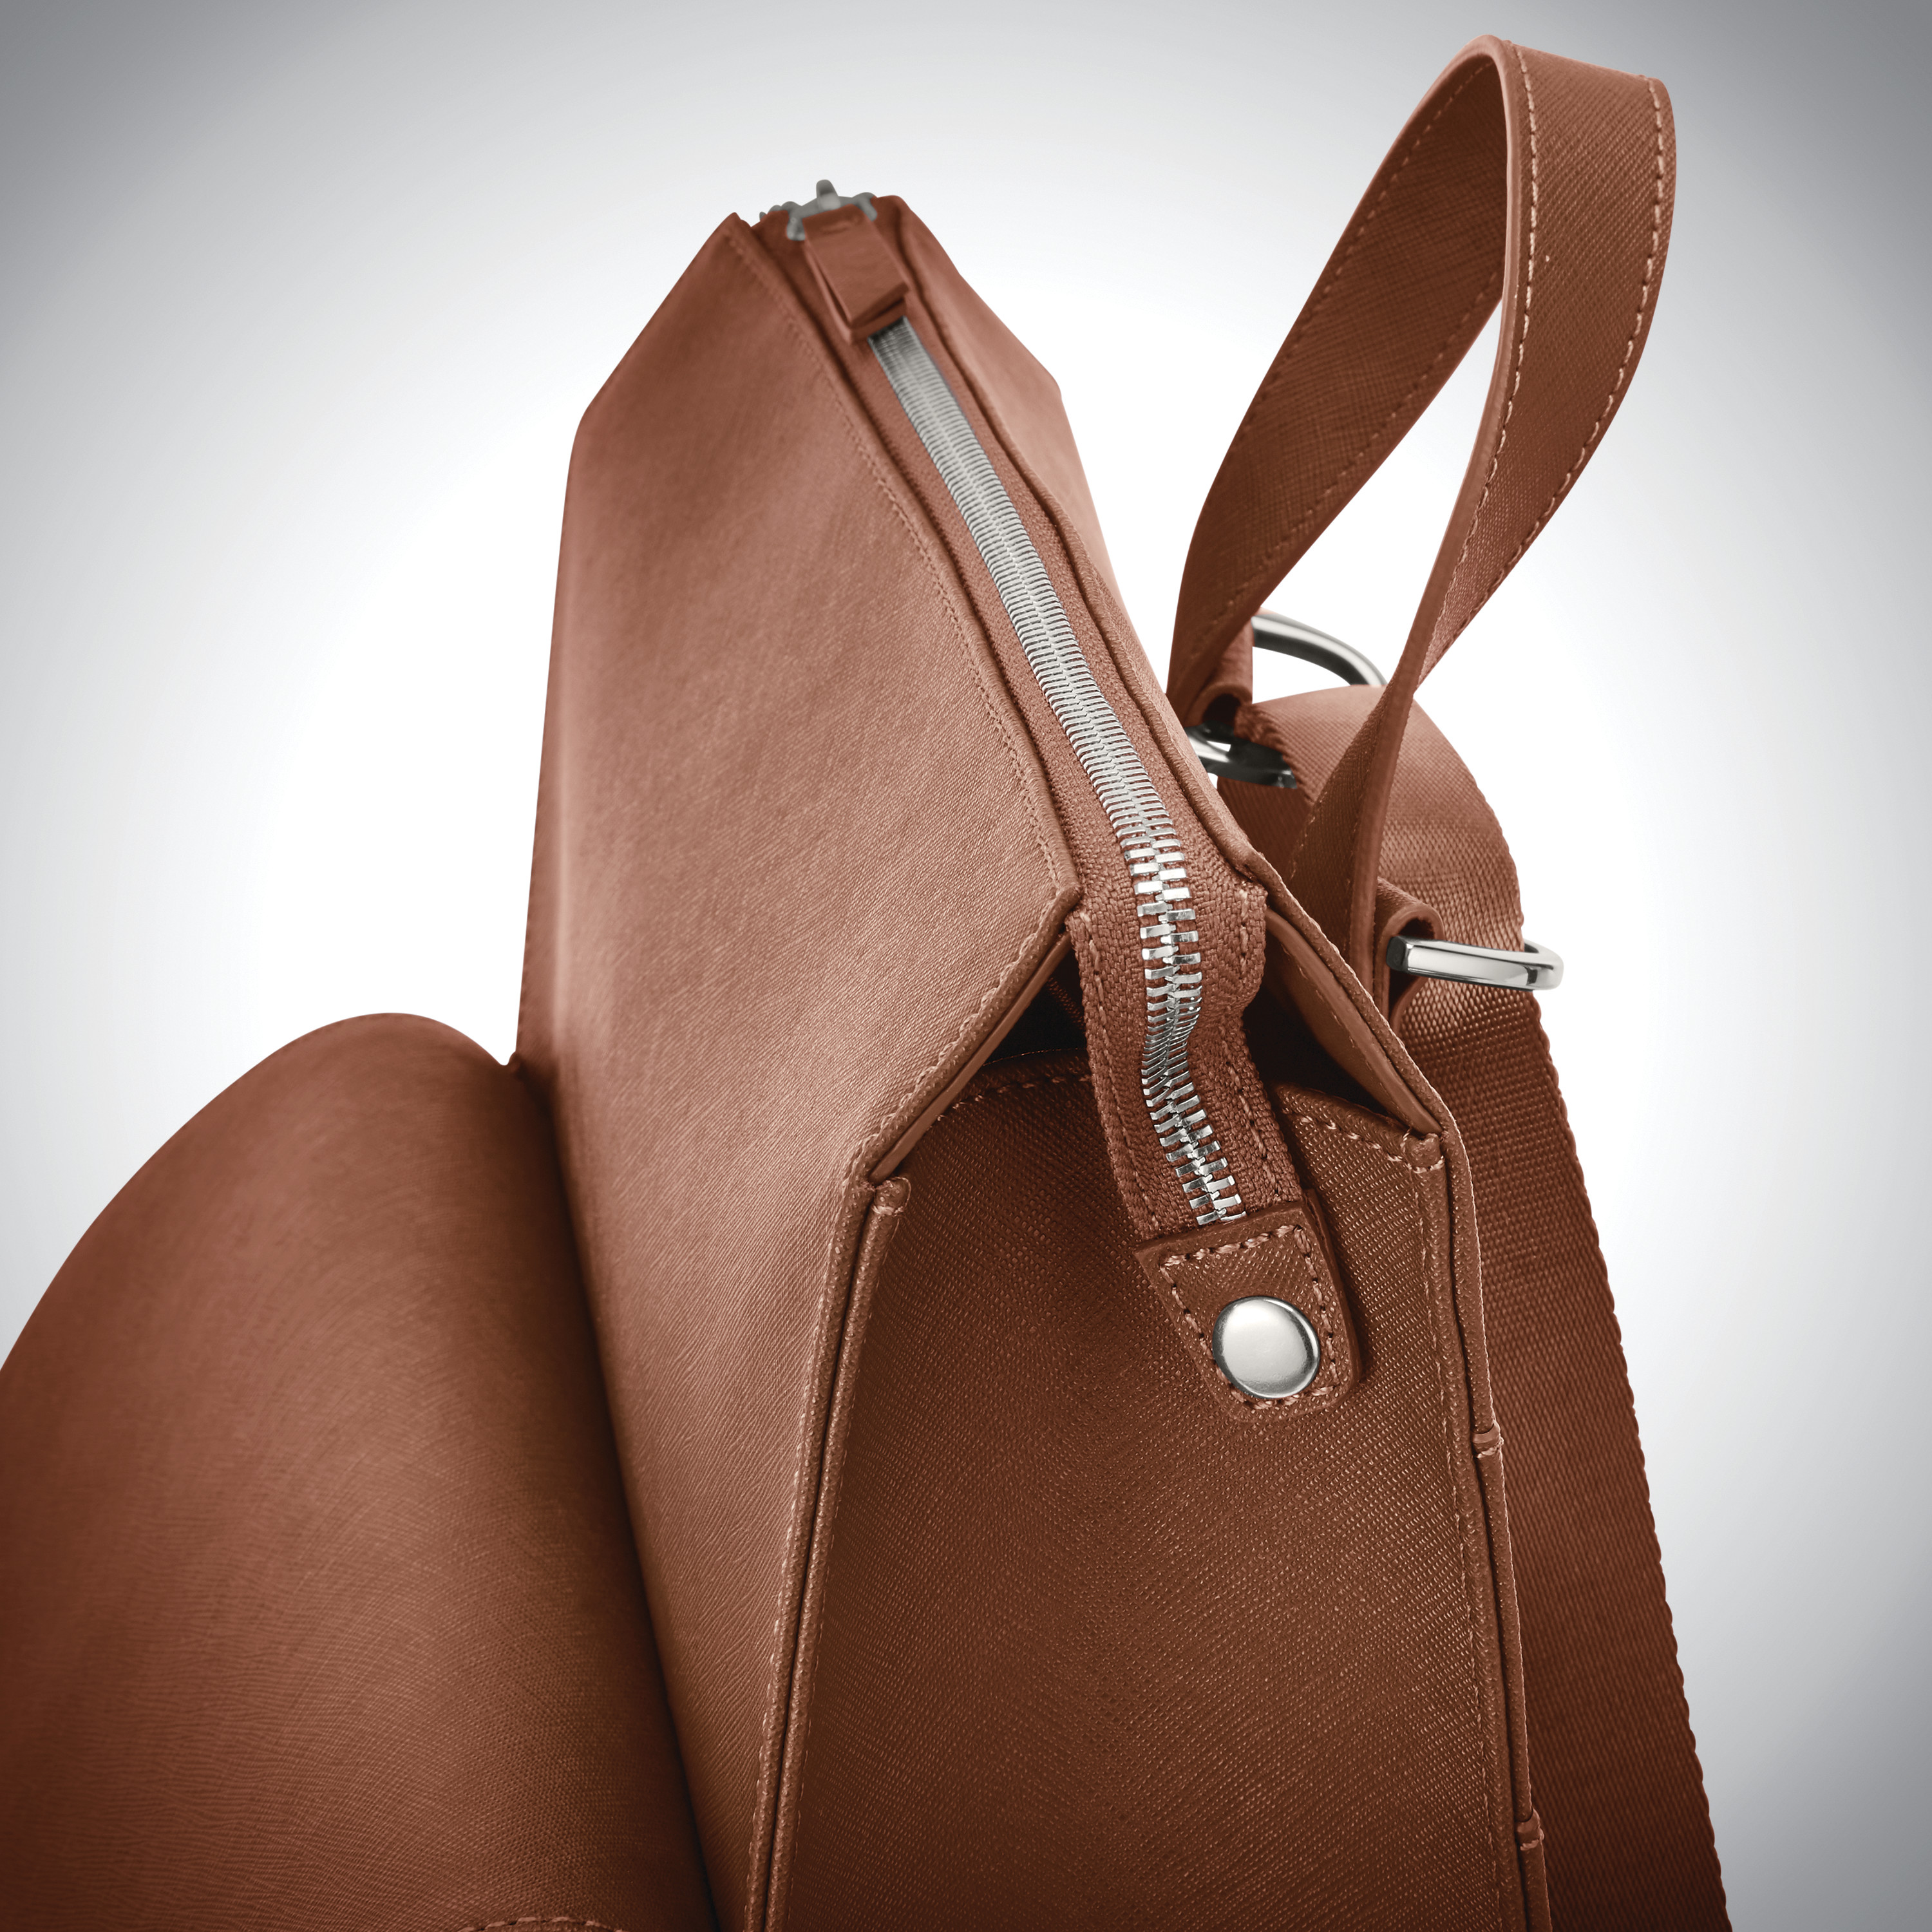 Twenty Four 2Pcs Set Checkered Backpacks For Women's Fashion Pu Leather Bag  Multipurpose Design Convertible Satchel Bag For Travel School 